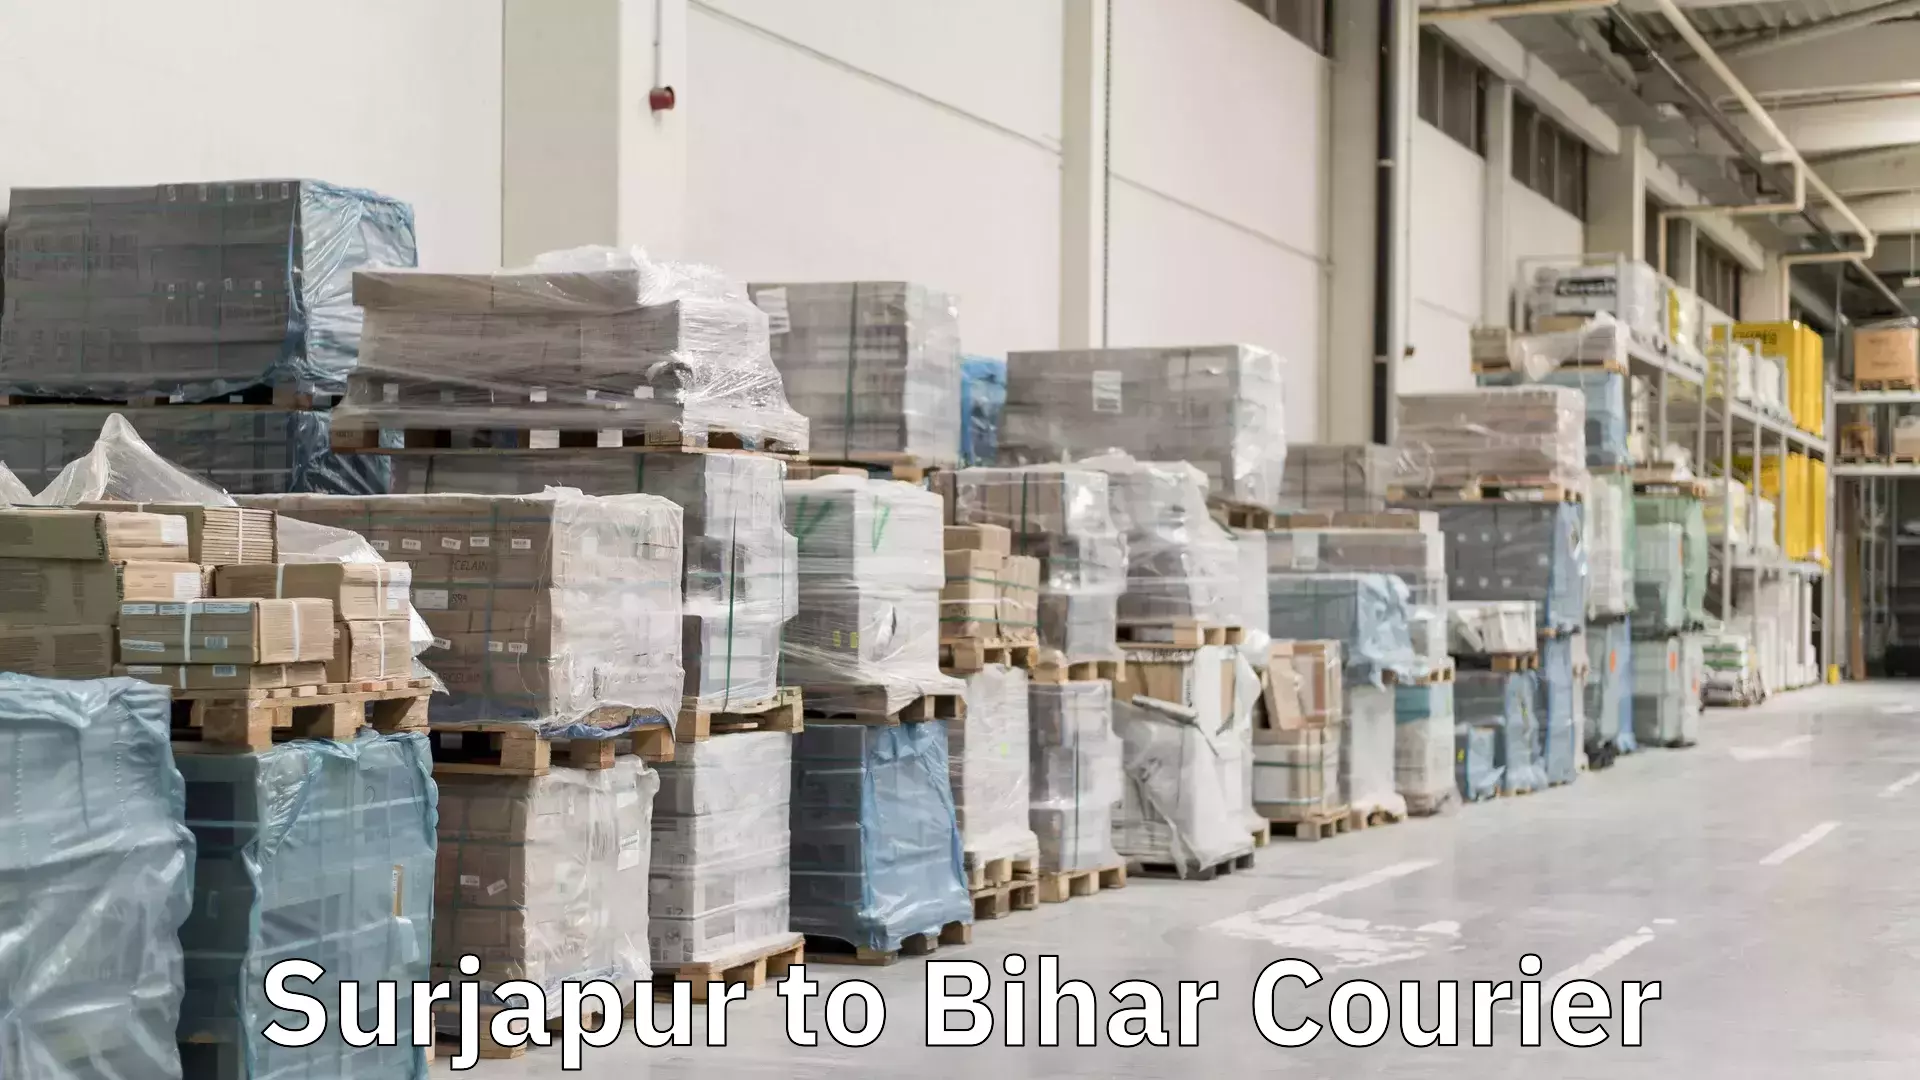 Speedy delivery service Surjapur to Bihar